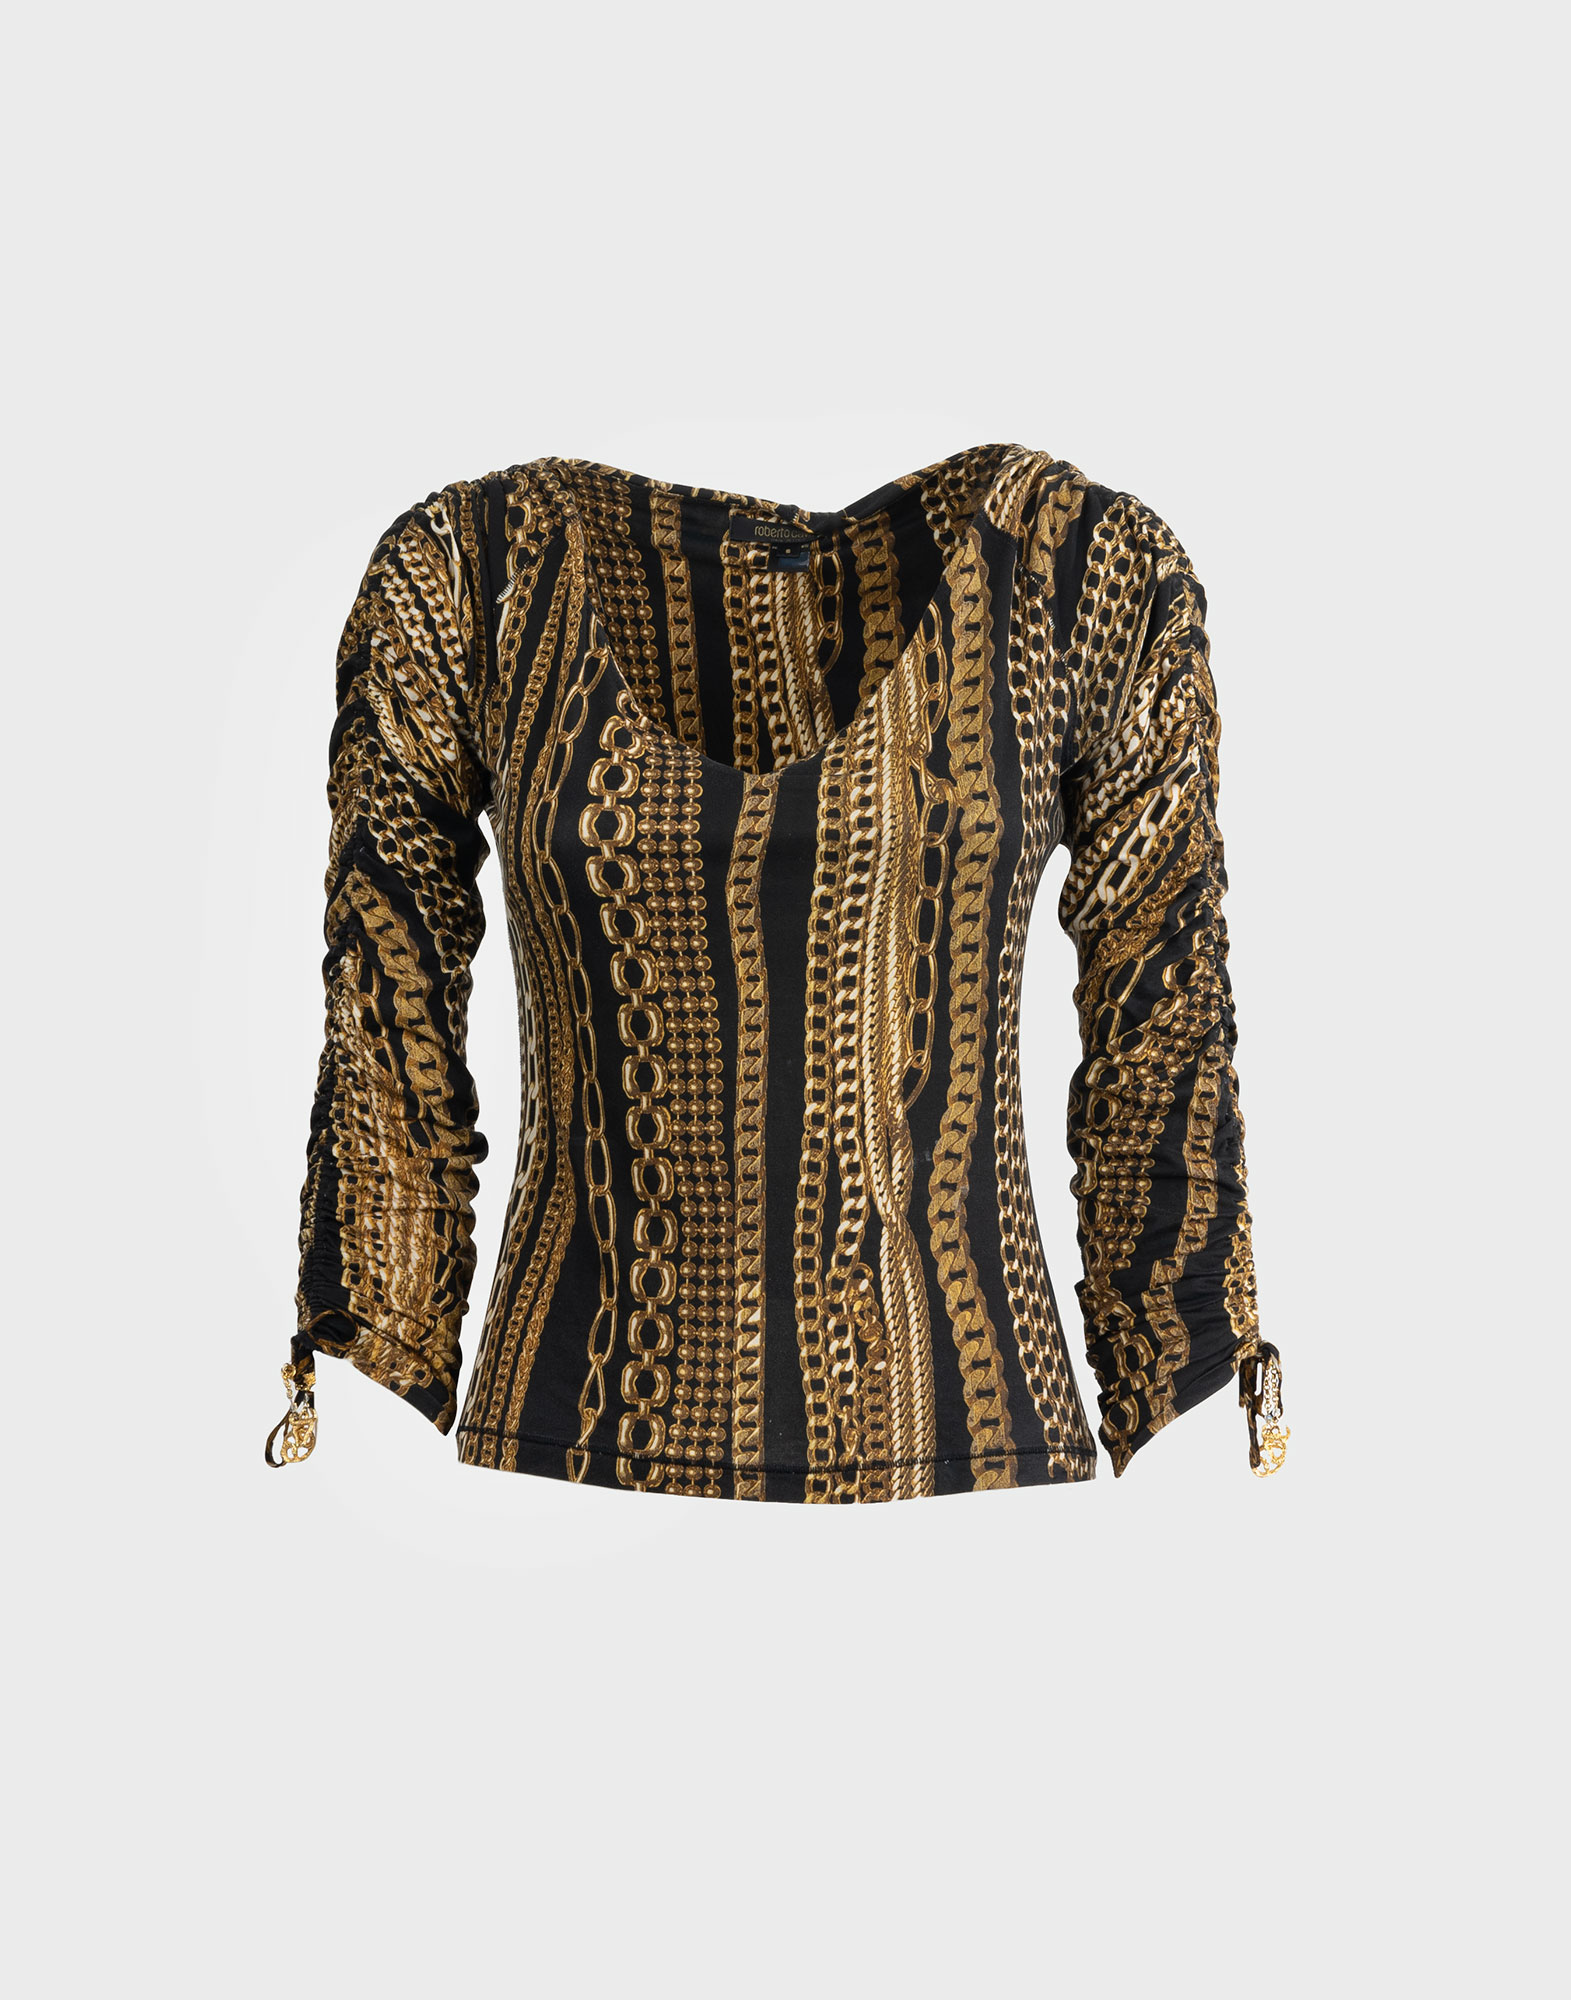 roberto cavalli 2000s v-neck, black bottom and baroque pattern t-shirt